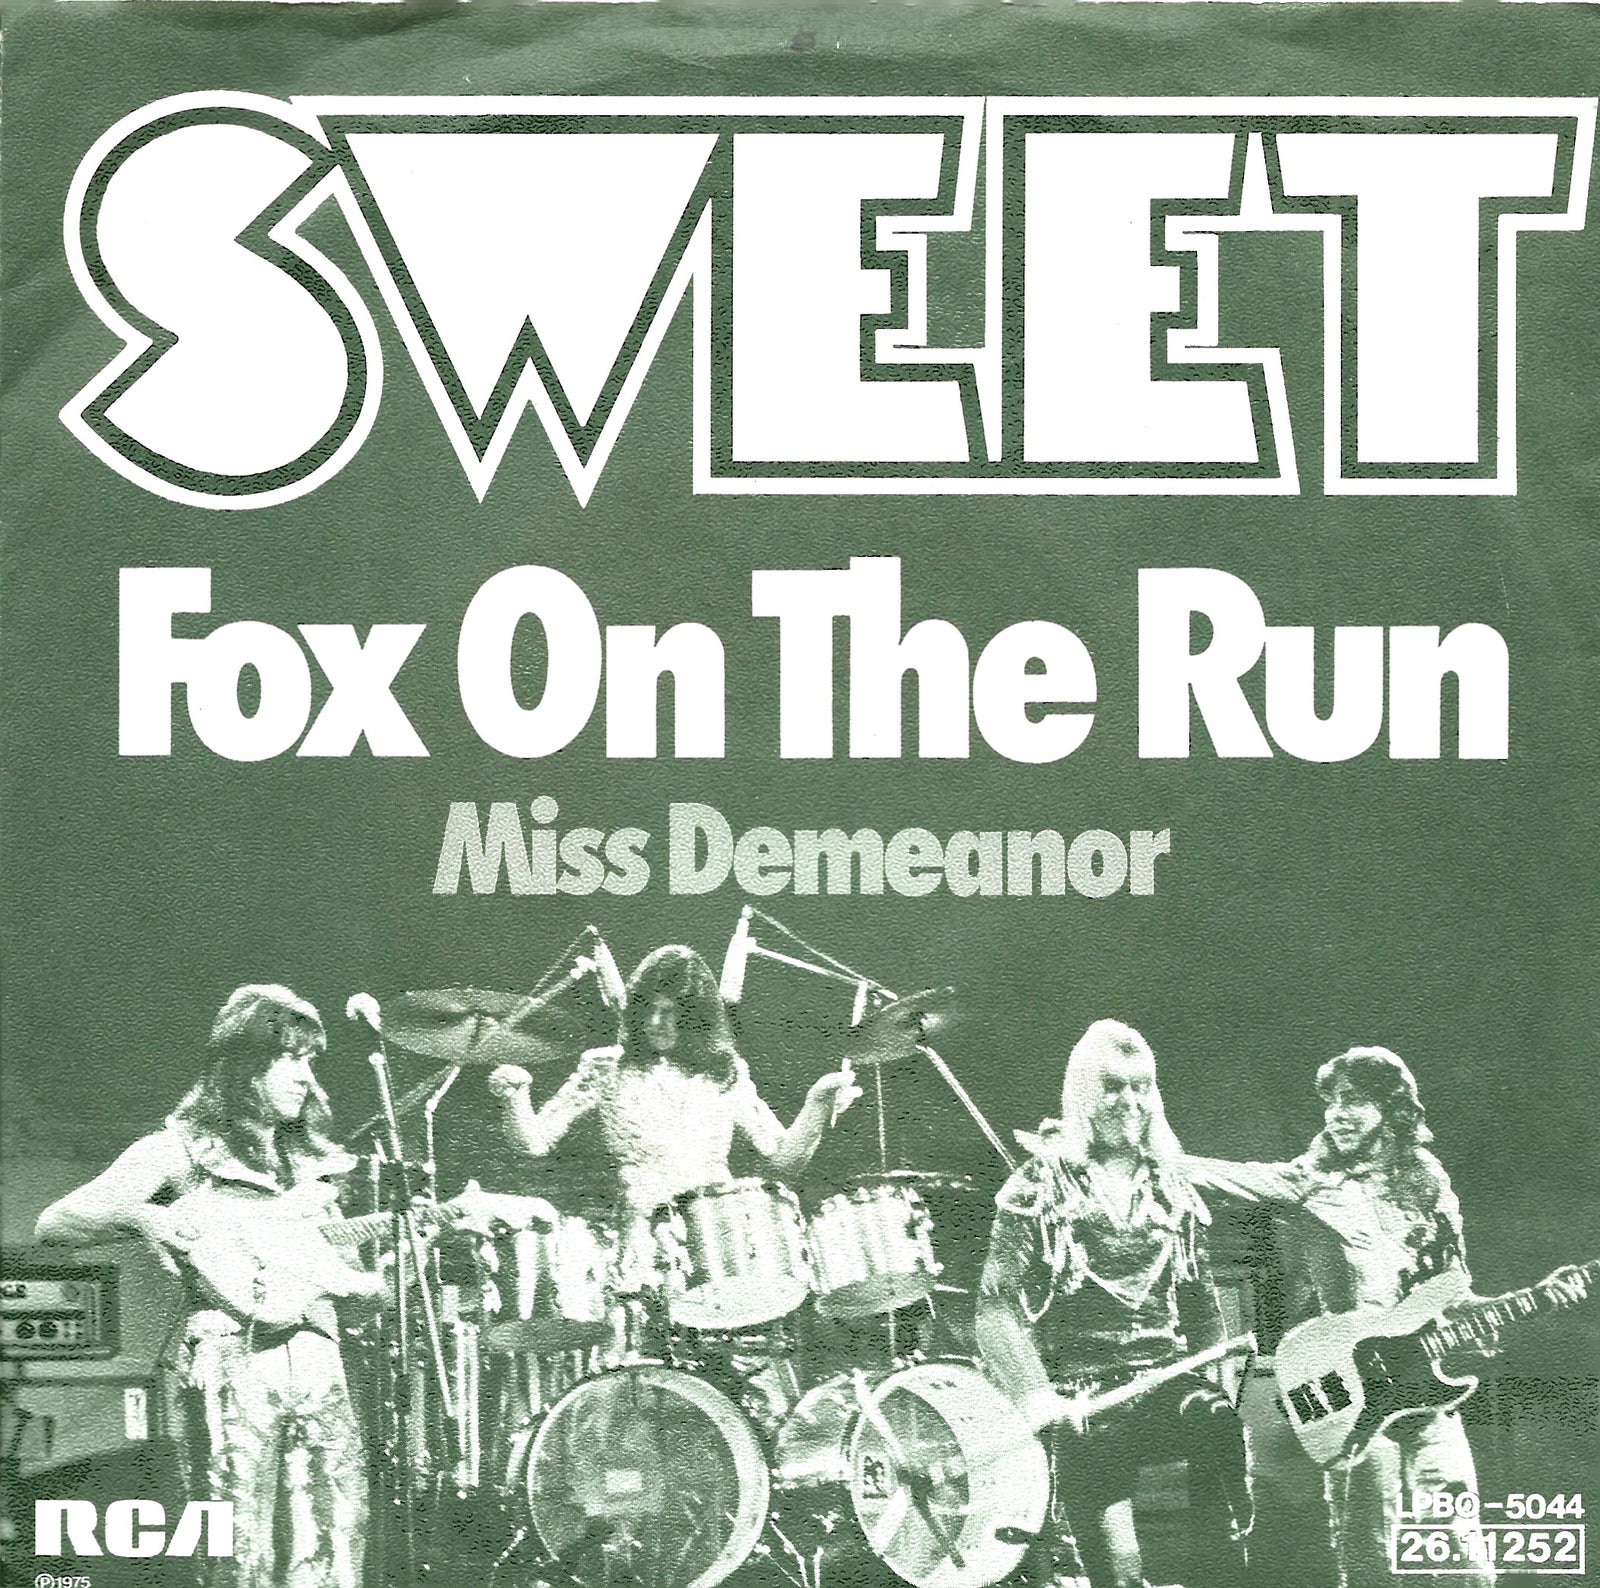 Single, Sweet, Fox on the run